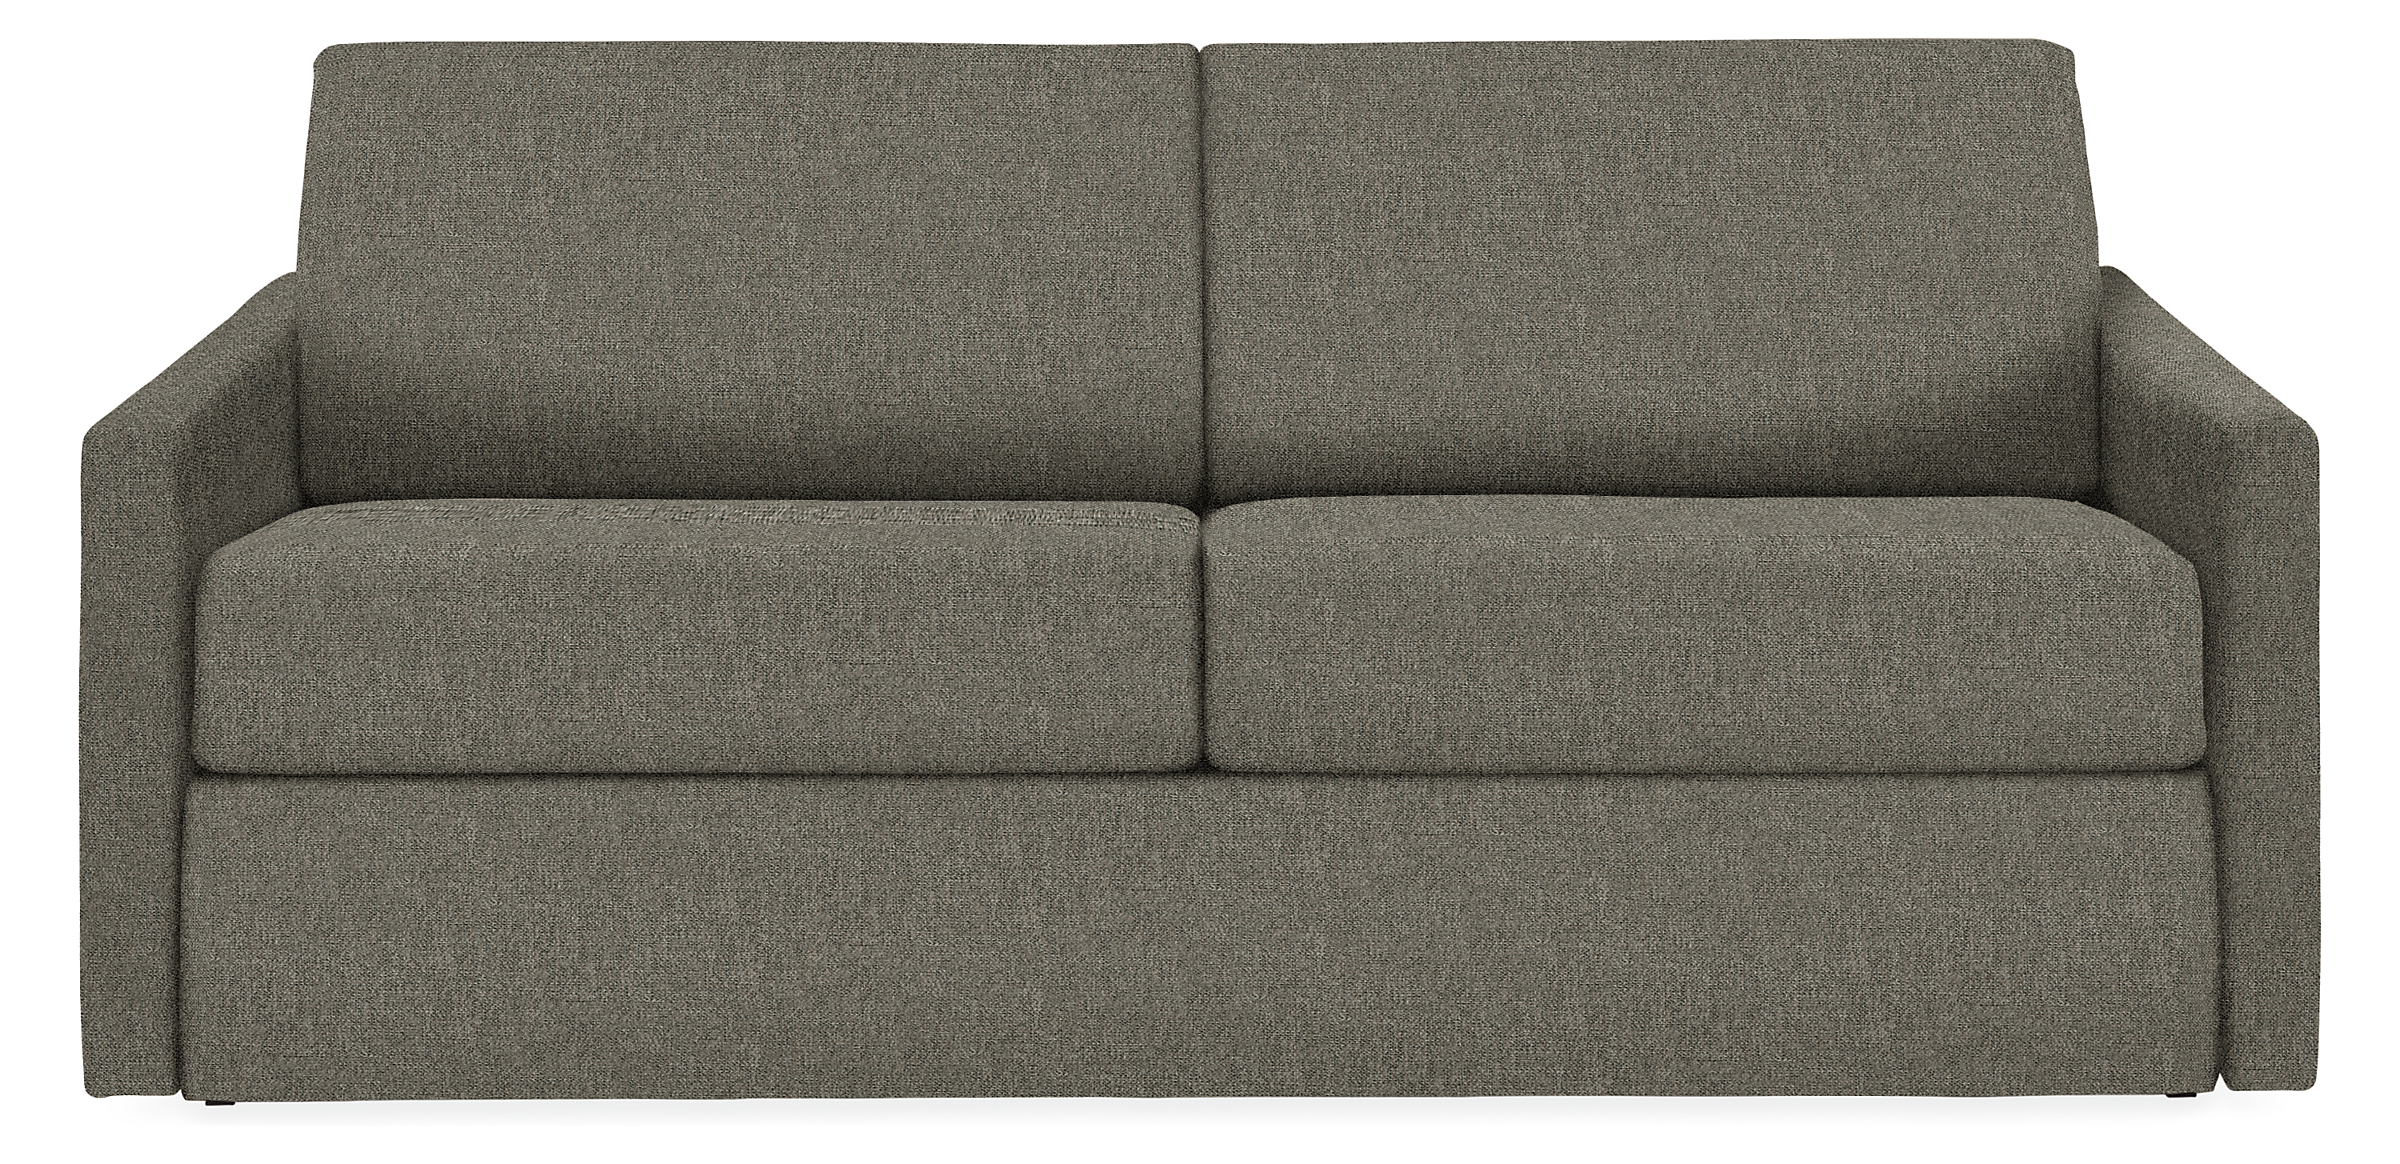 Franklin 81" Fold-out Sleeper Sofa